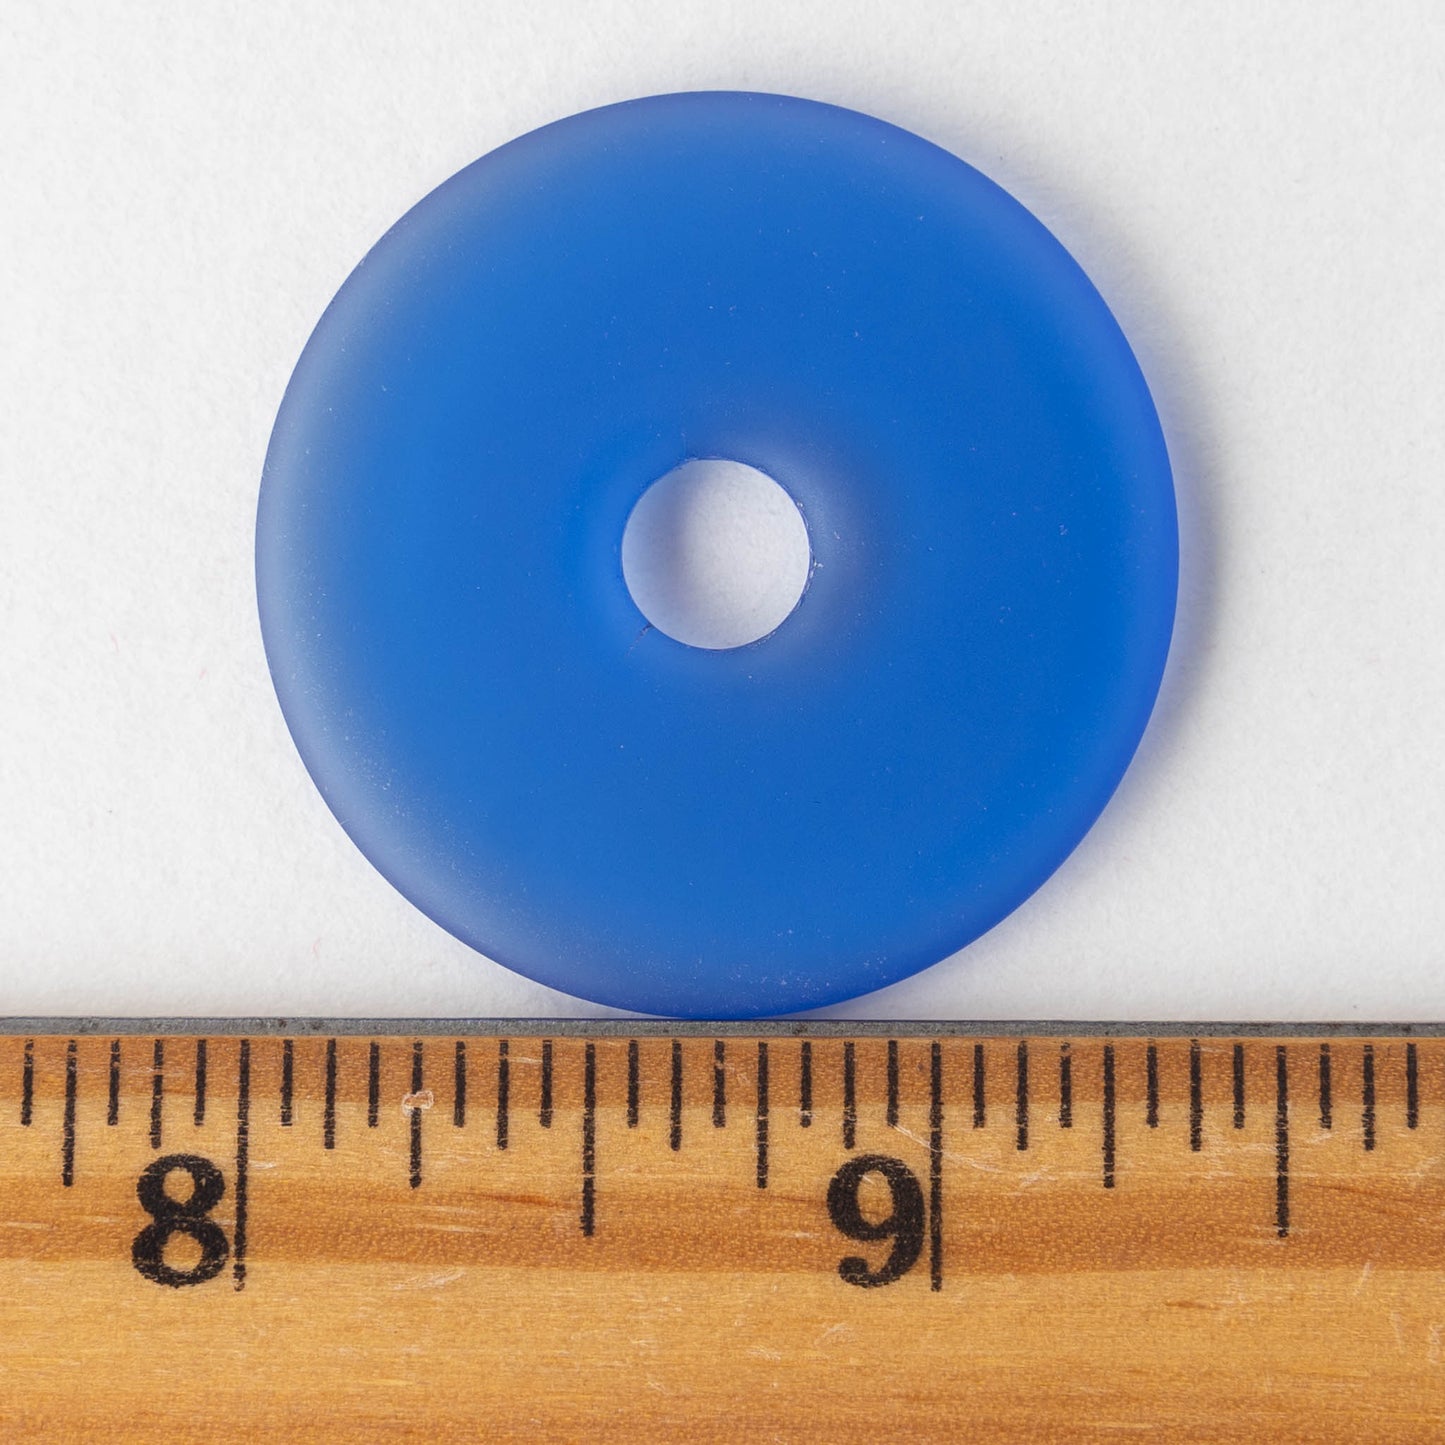 34mm Frosted Glass Donut - Cobalt Blue - 1 Donut